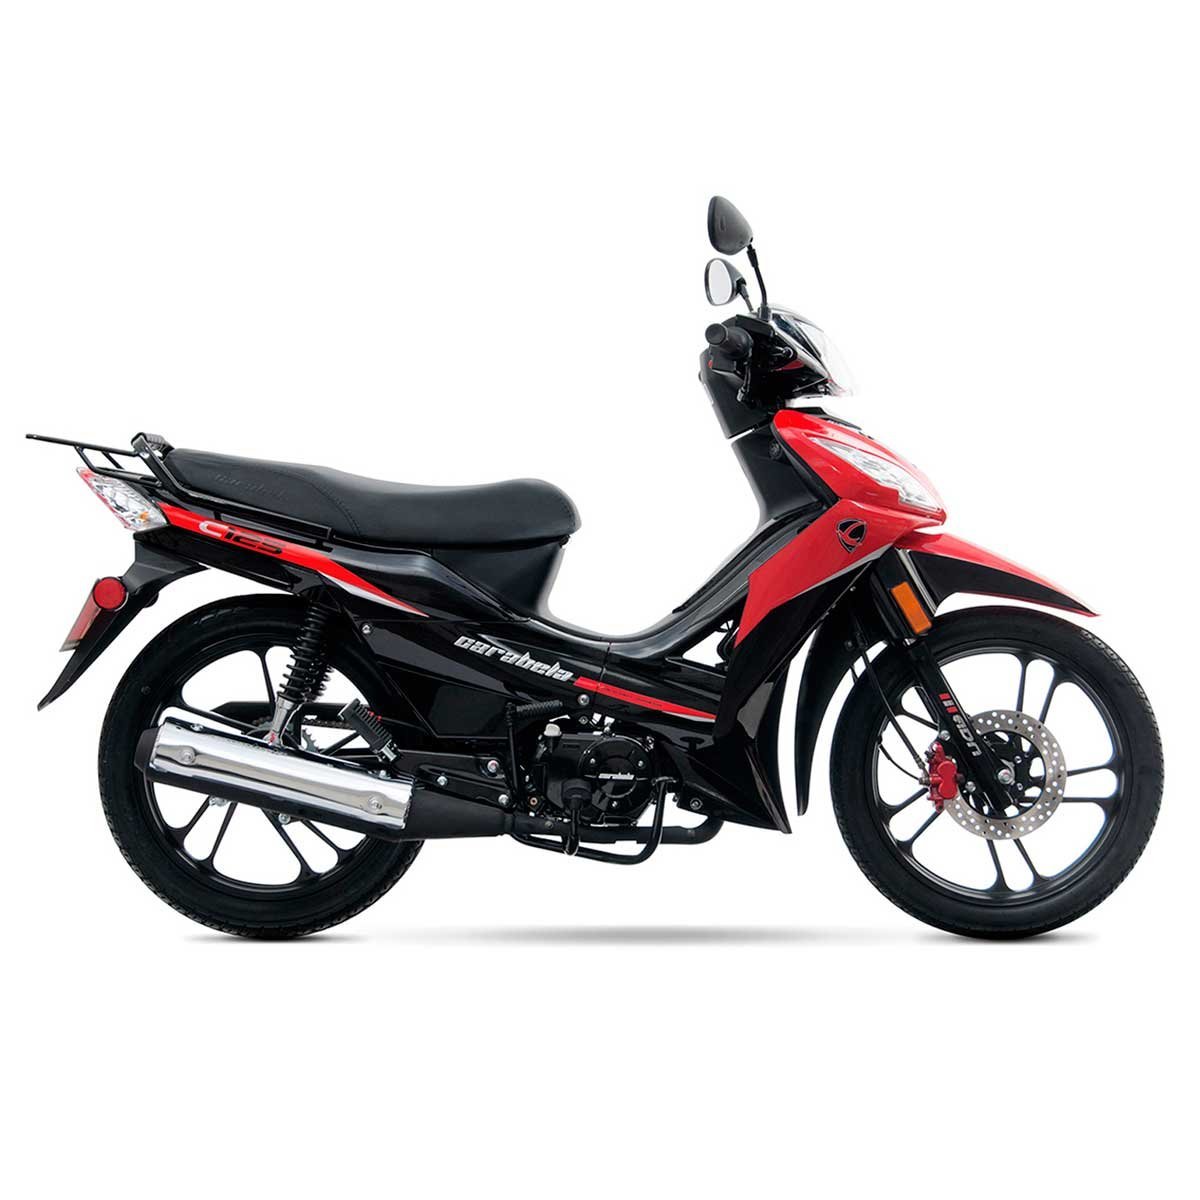 Motocicleta C125 Roja 2020 Carabela